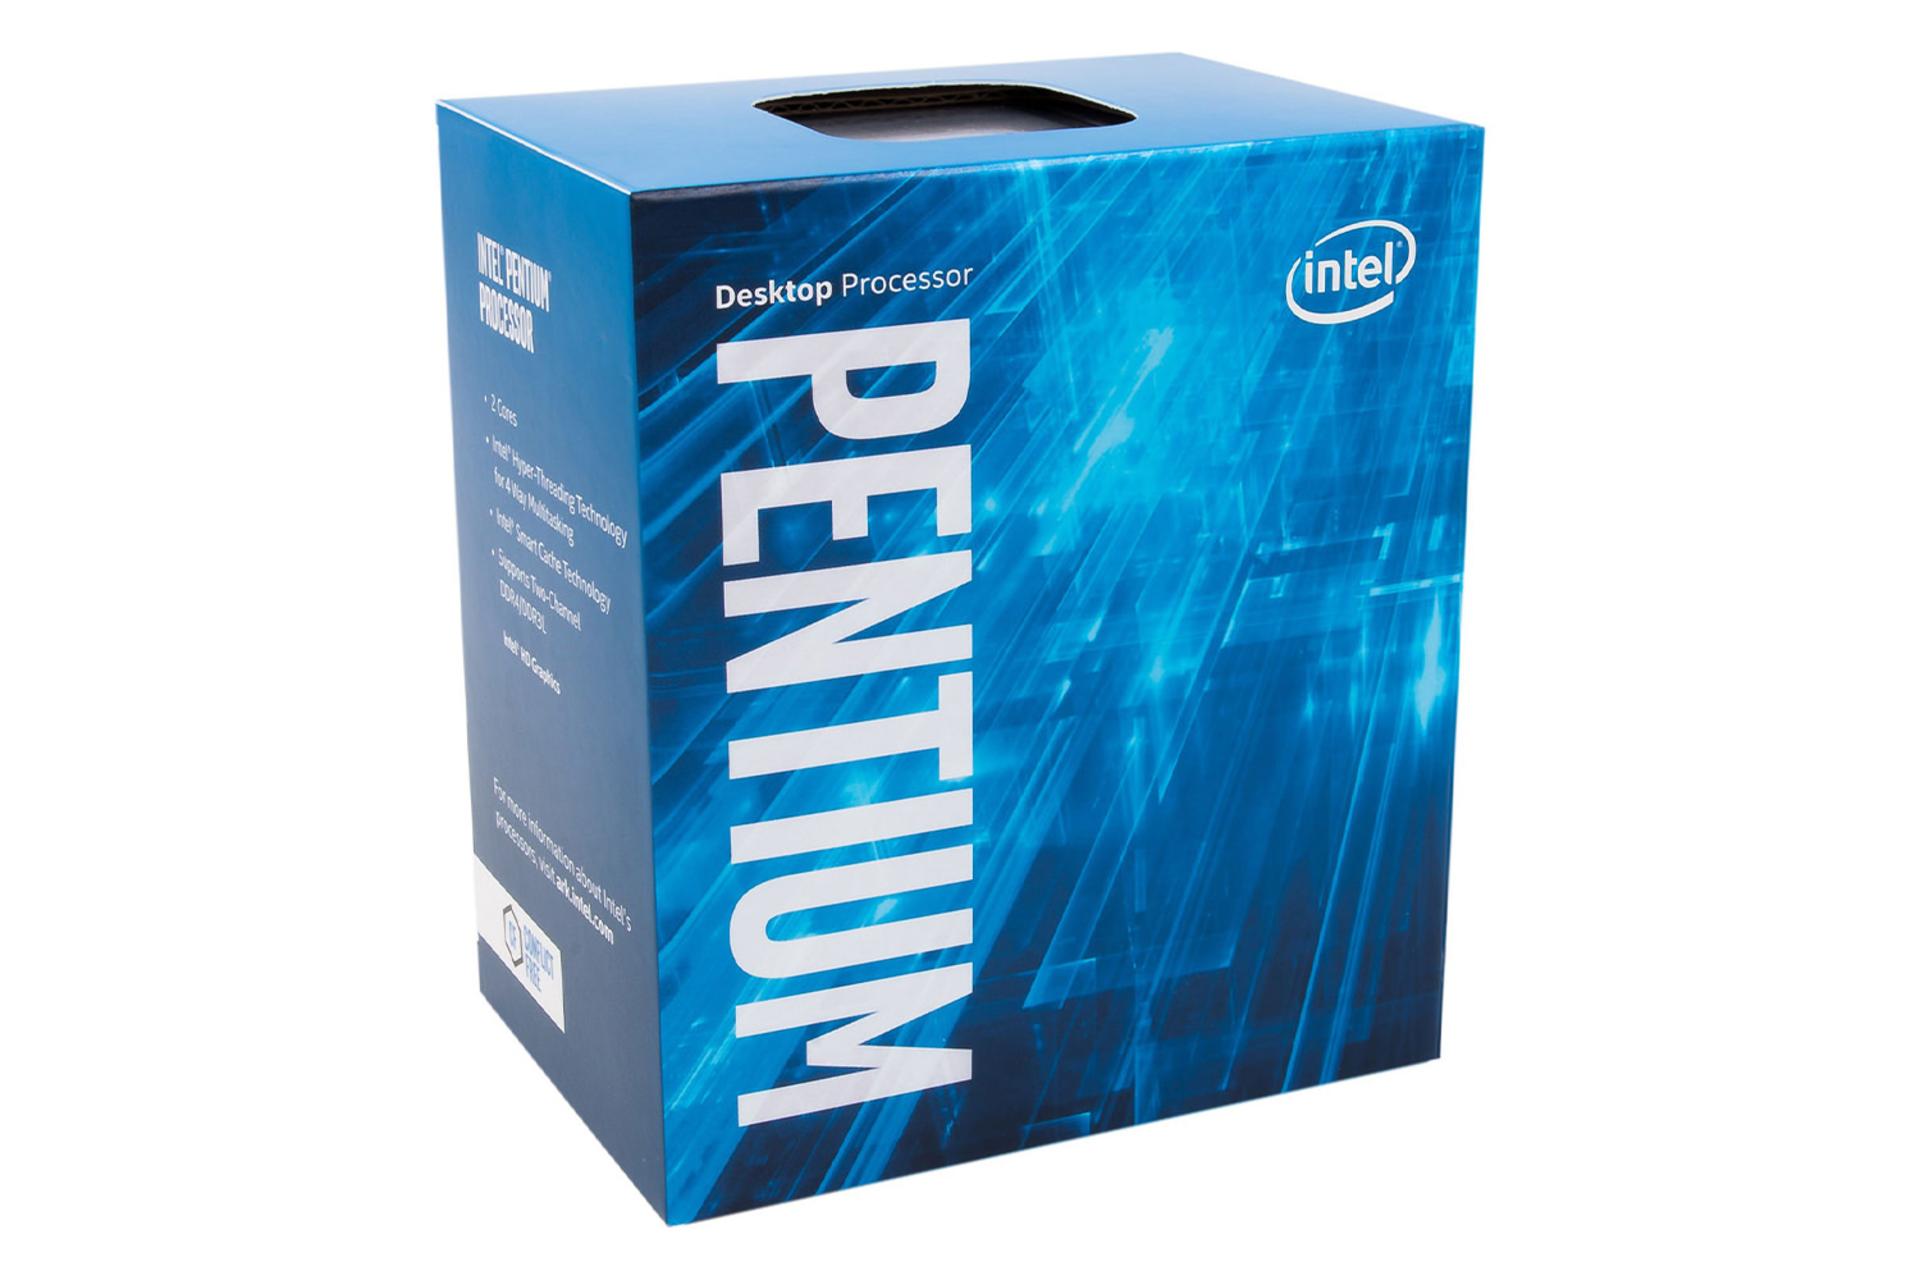 Intel Pentium G2020 / اینتل پنتیوم G2020